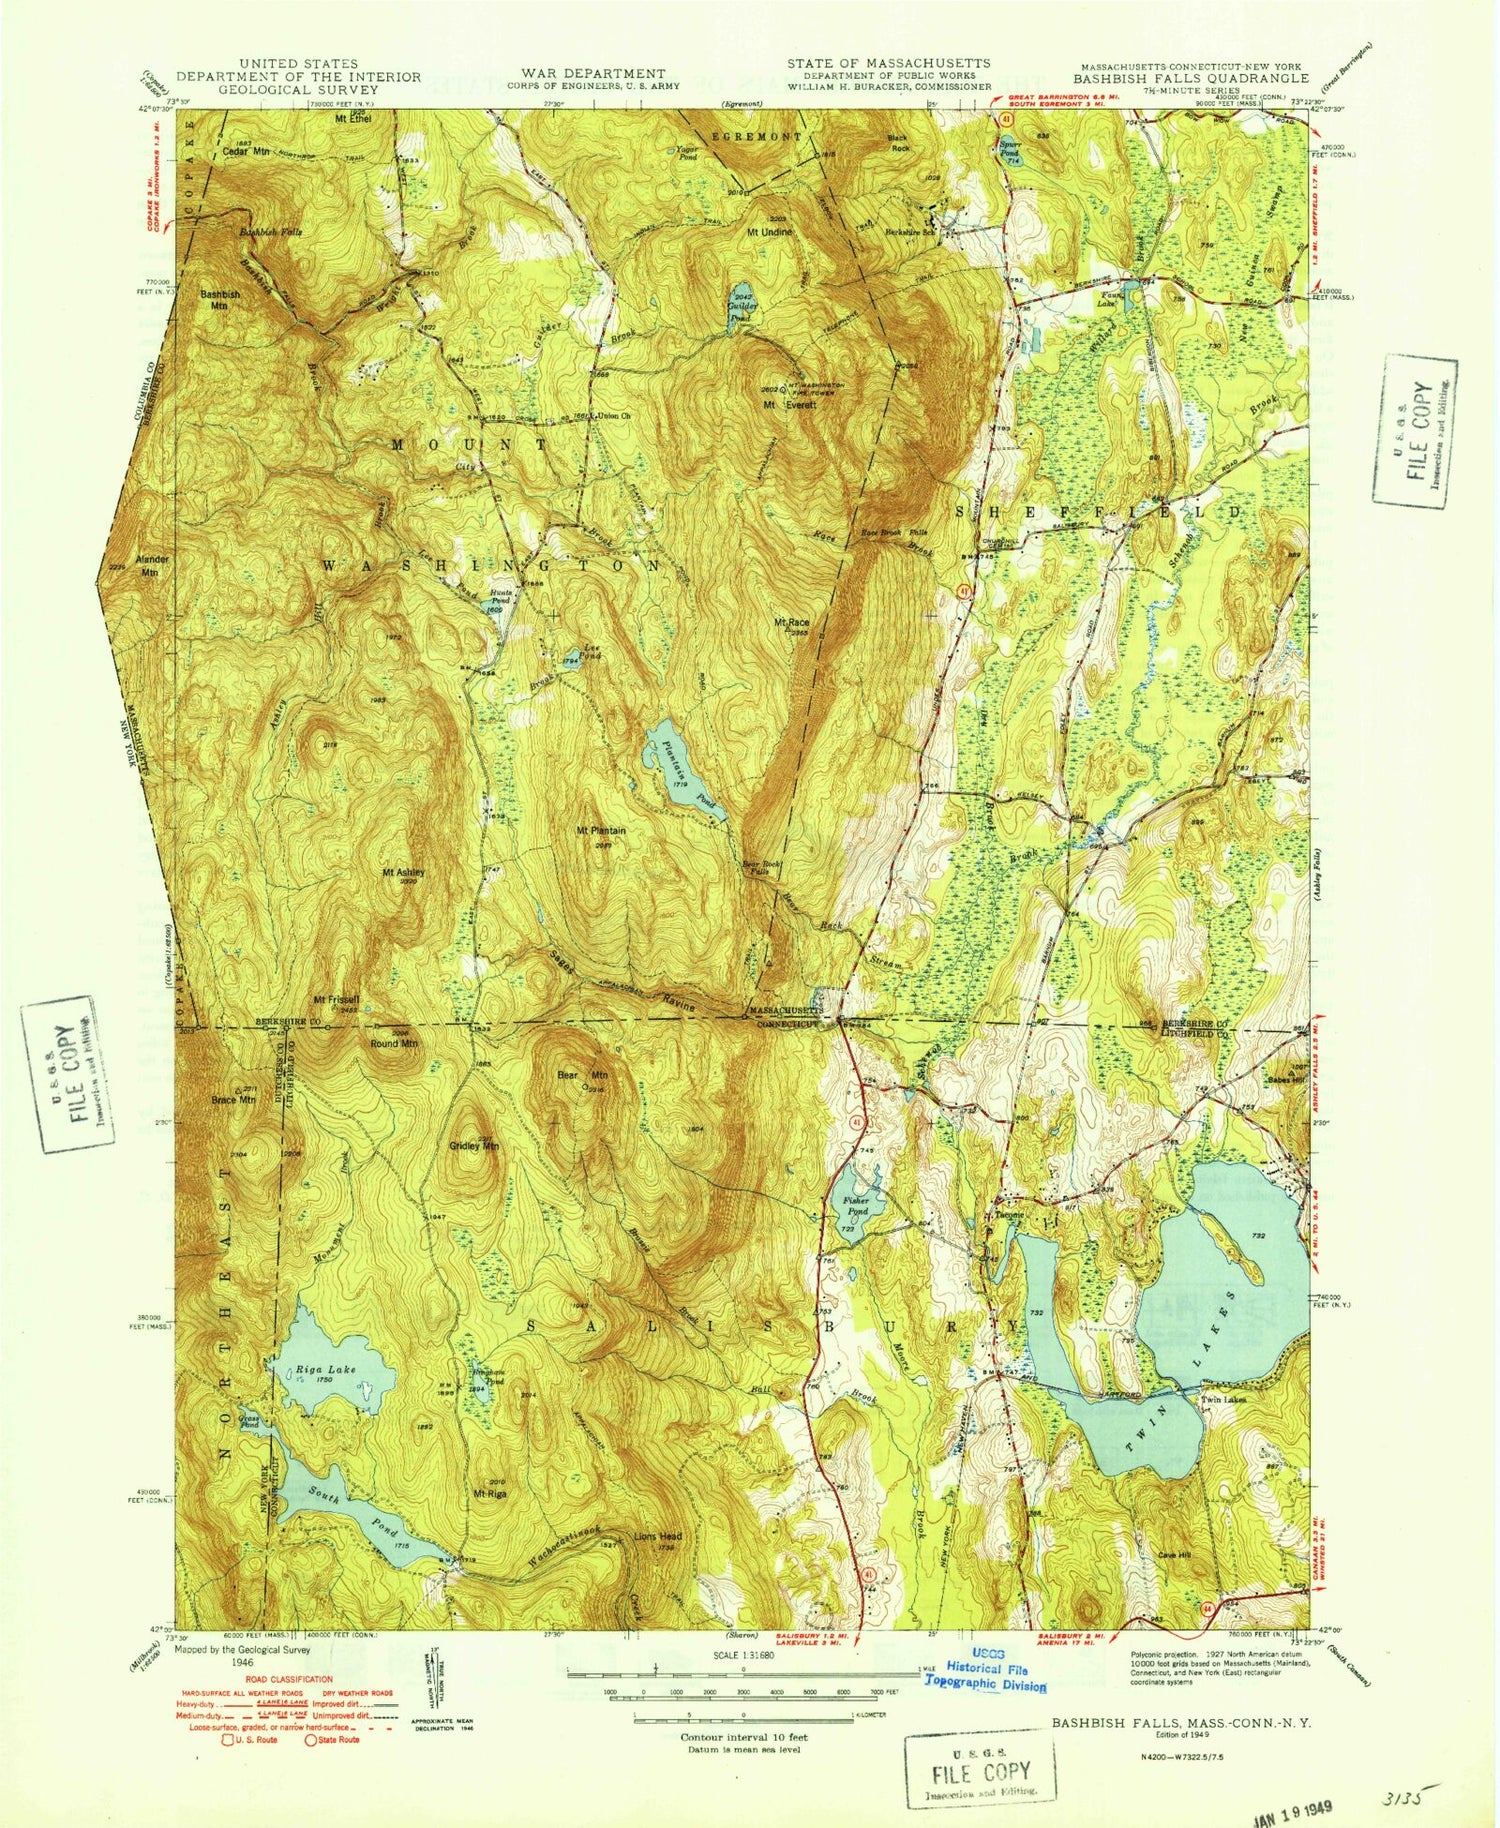 USGS Classic Bash Bish Falls Massachusetts 7.5'x7.5' Topo Map Image